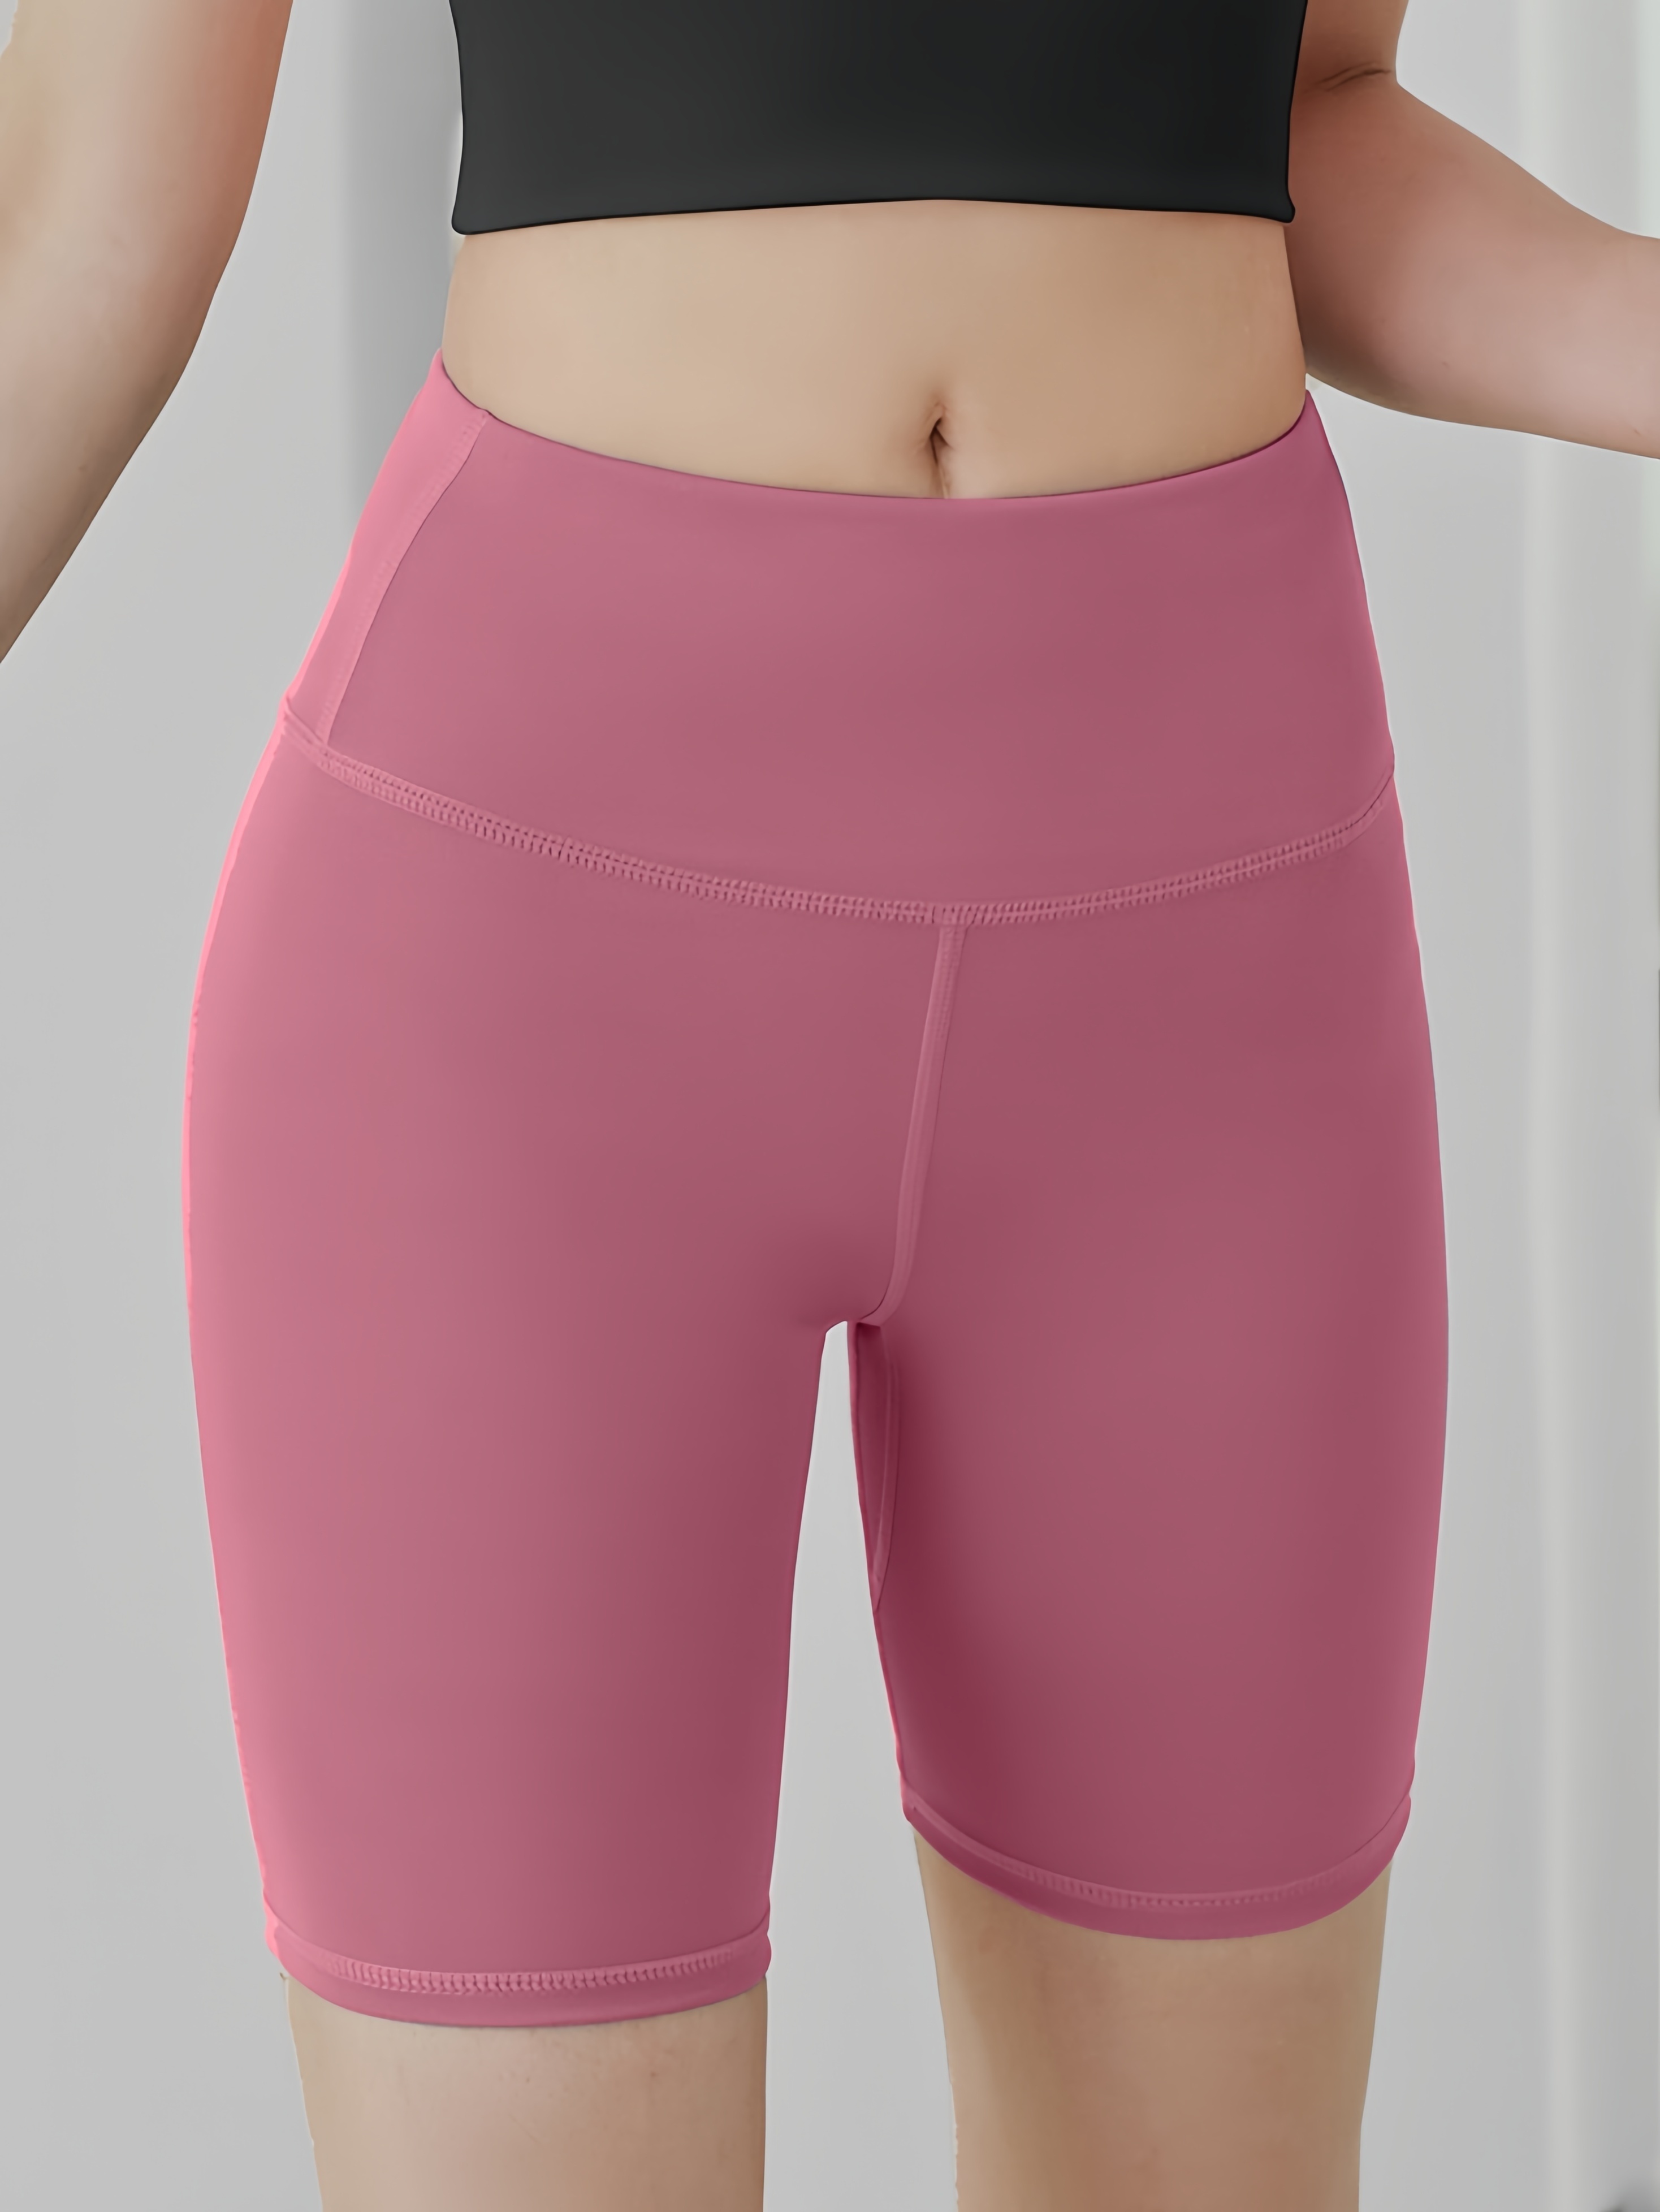 Women's Plus Size Casual Comfy Workout Yoga Basic Solid Biker Shorts Pants